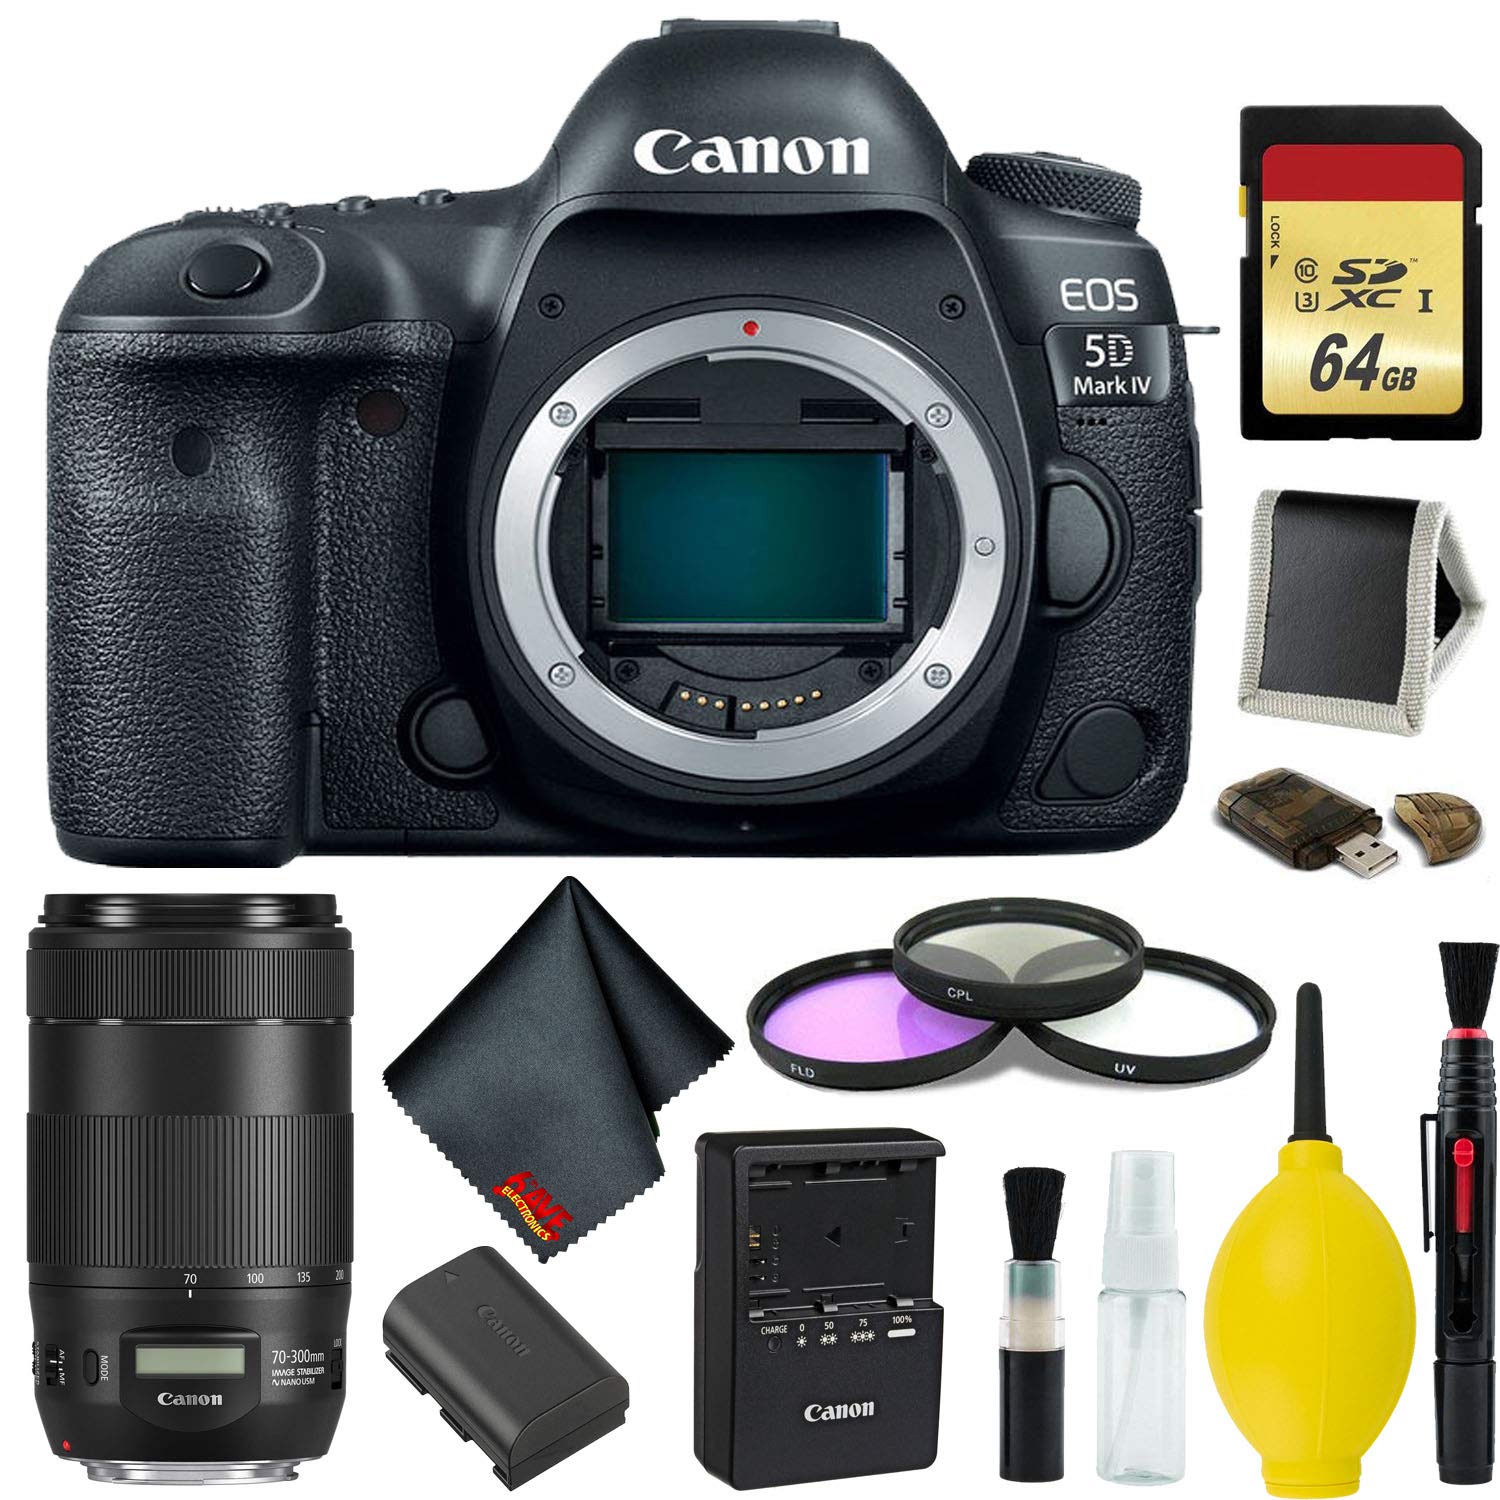 Canon EOS 5D Mark IV DSLR Camera Body Only Complete Kit (International Model) w/Canon EF 70-300mm f/4-5.6 is II USM Lens